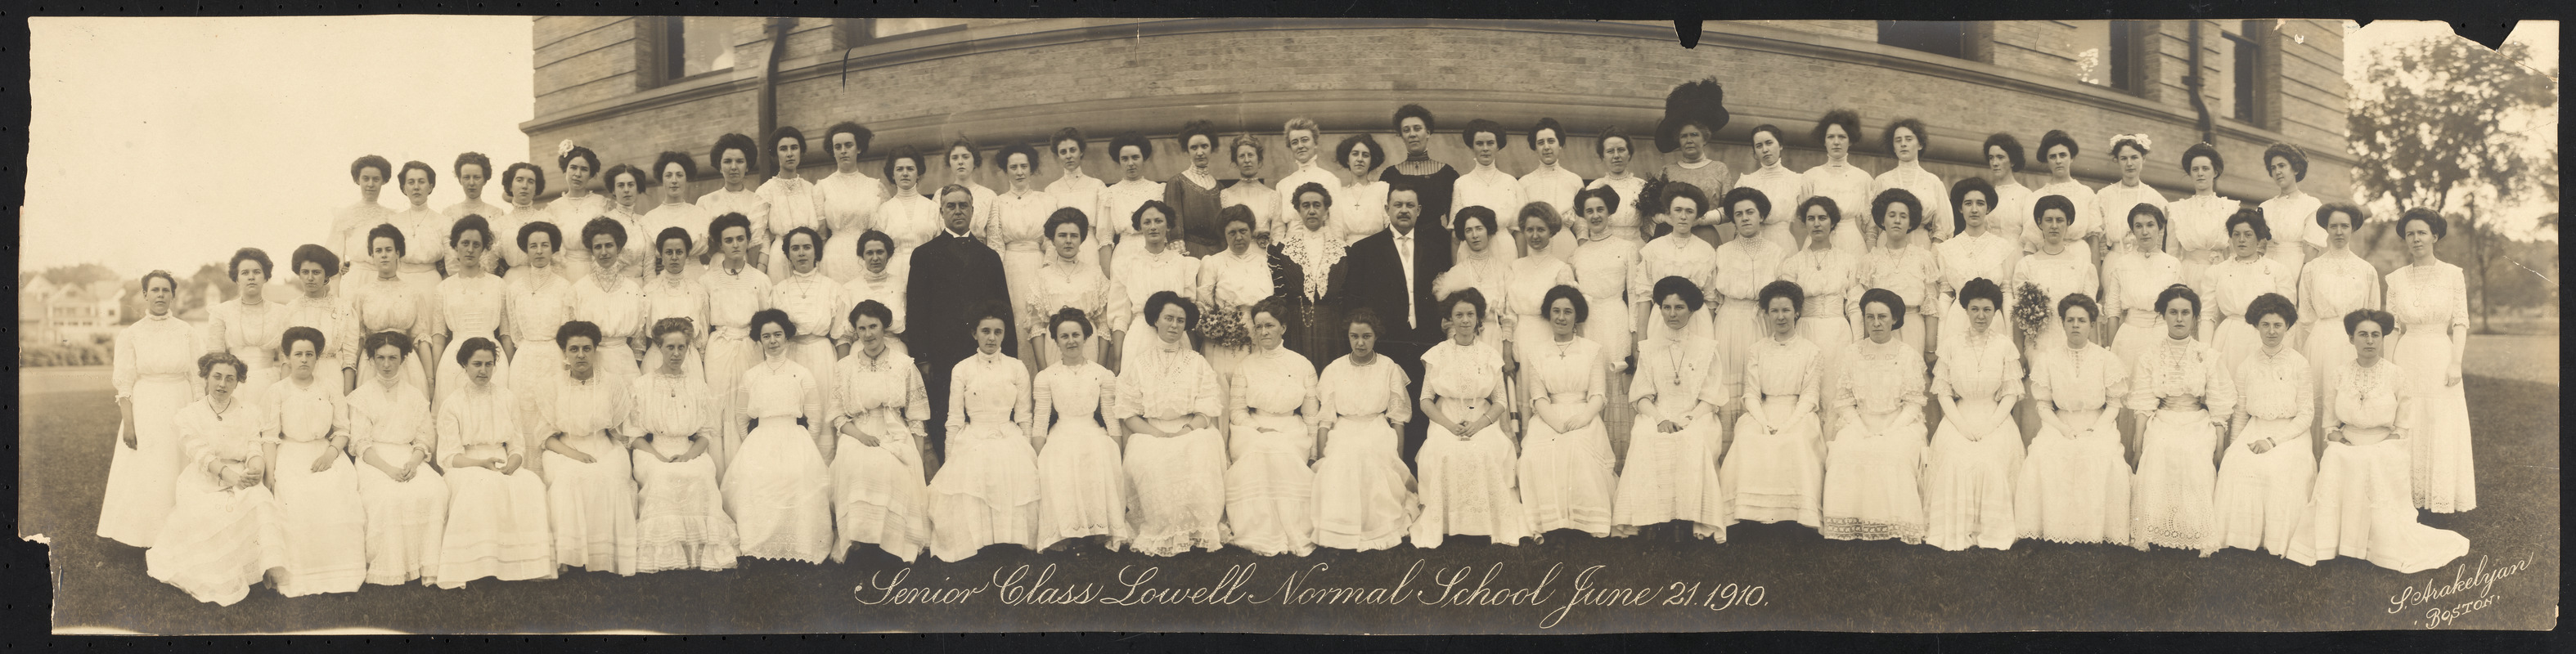 Senior class, Lowell Normal School, June 21, 1910